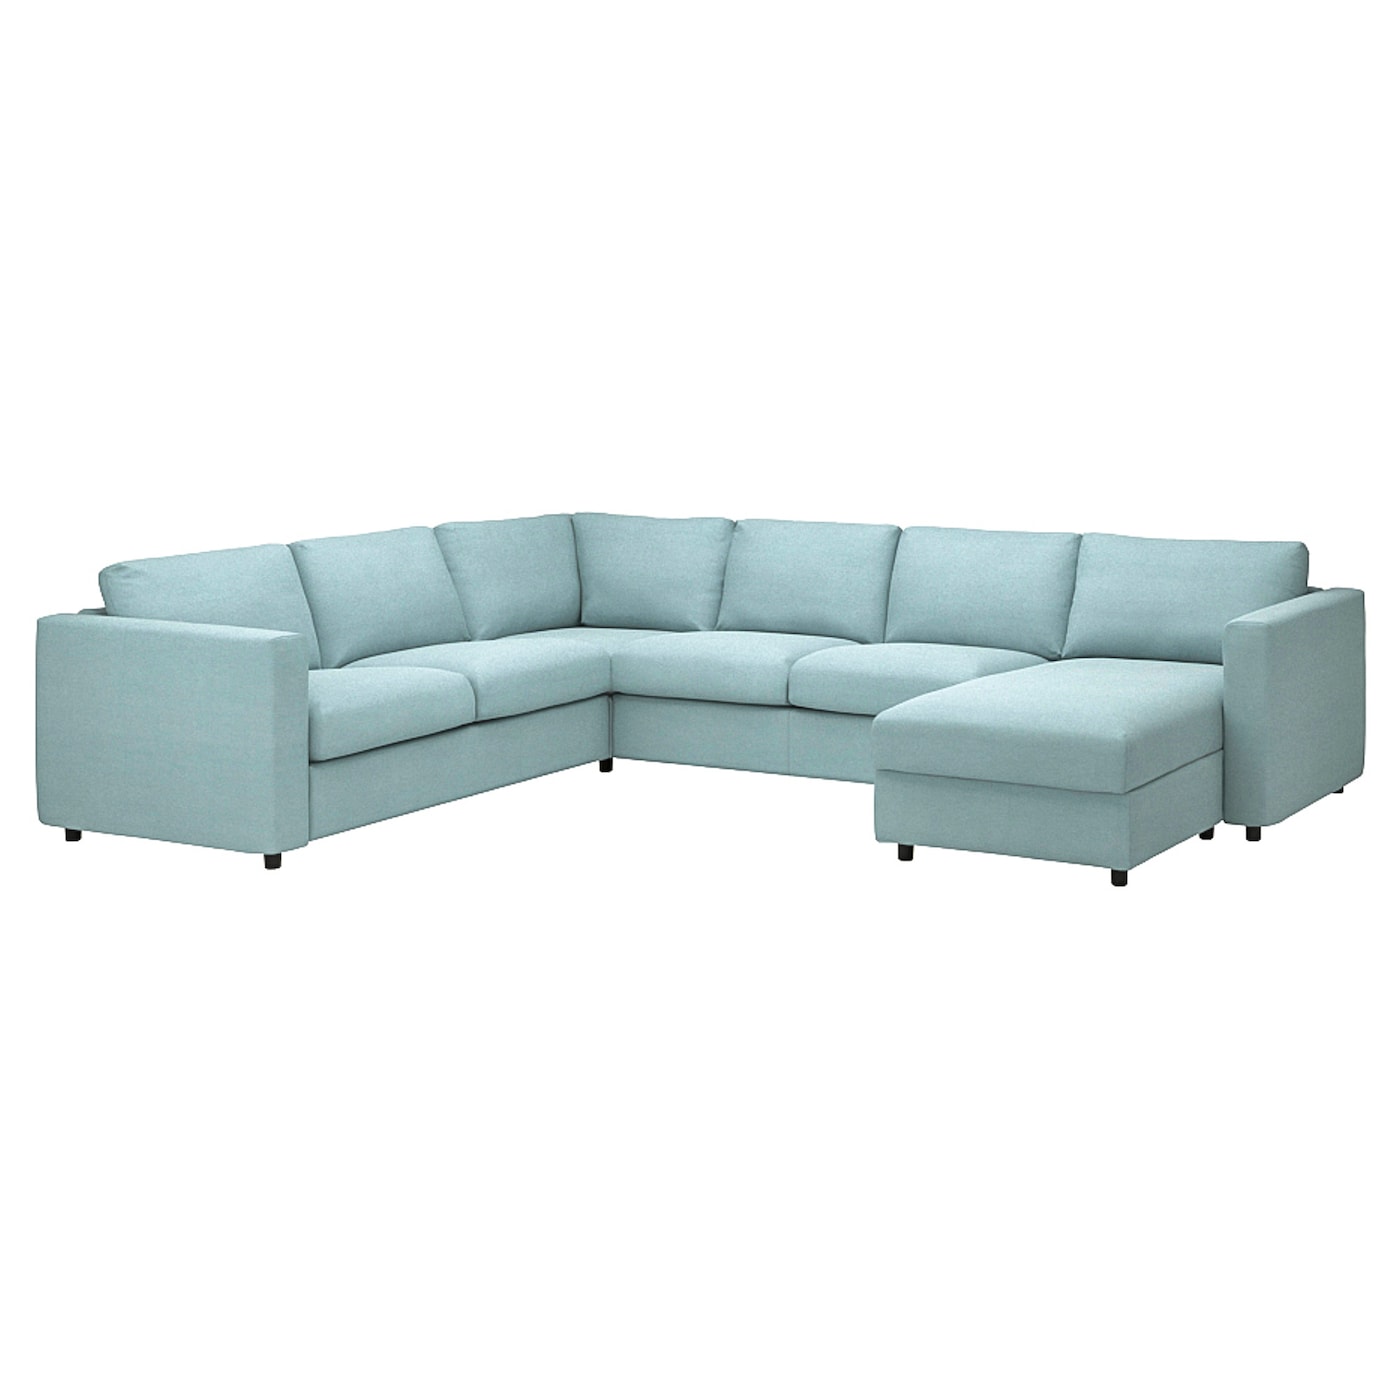 ВИМЛЕ Диван угловой, 5-местный. диван+диван, с диваном/Saxemara светло-синий VIMLE IKEA